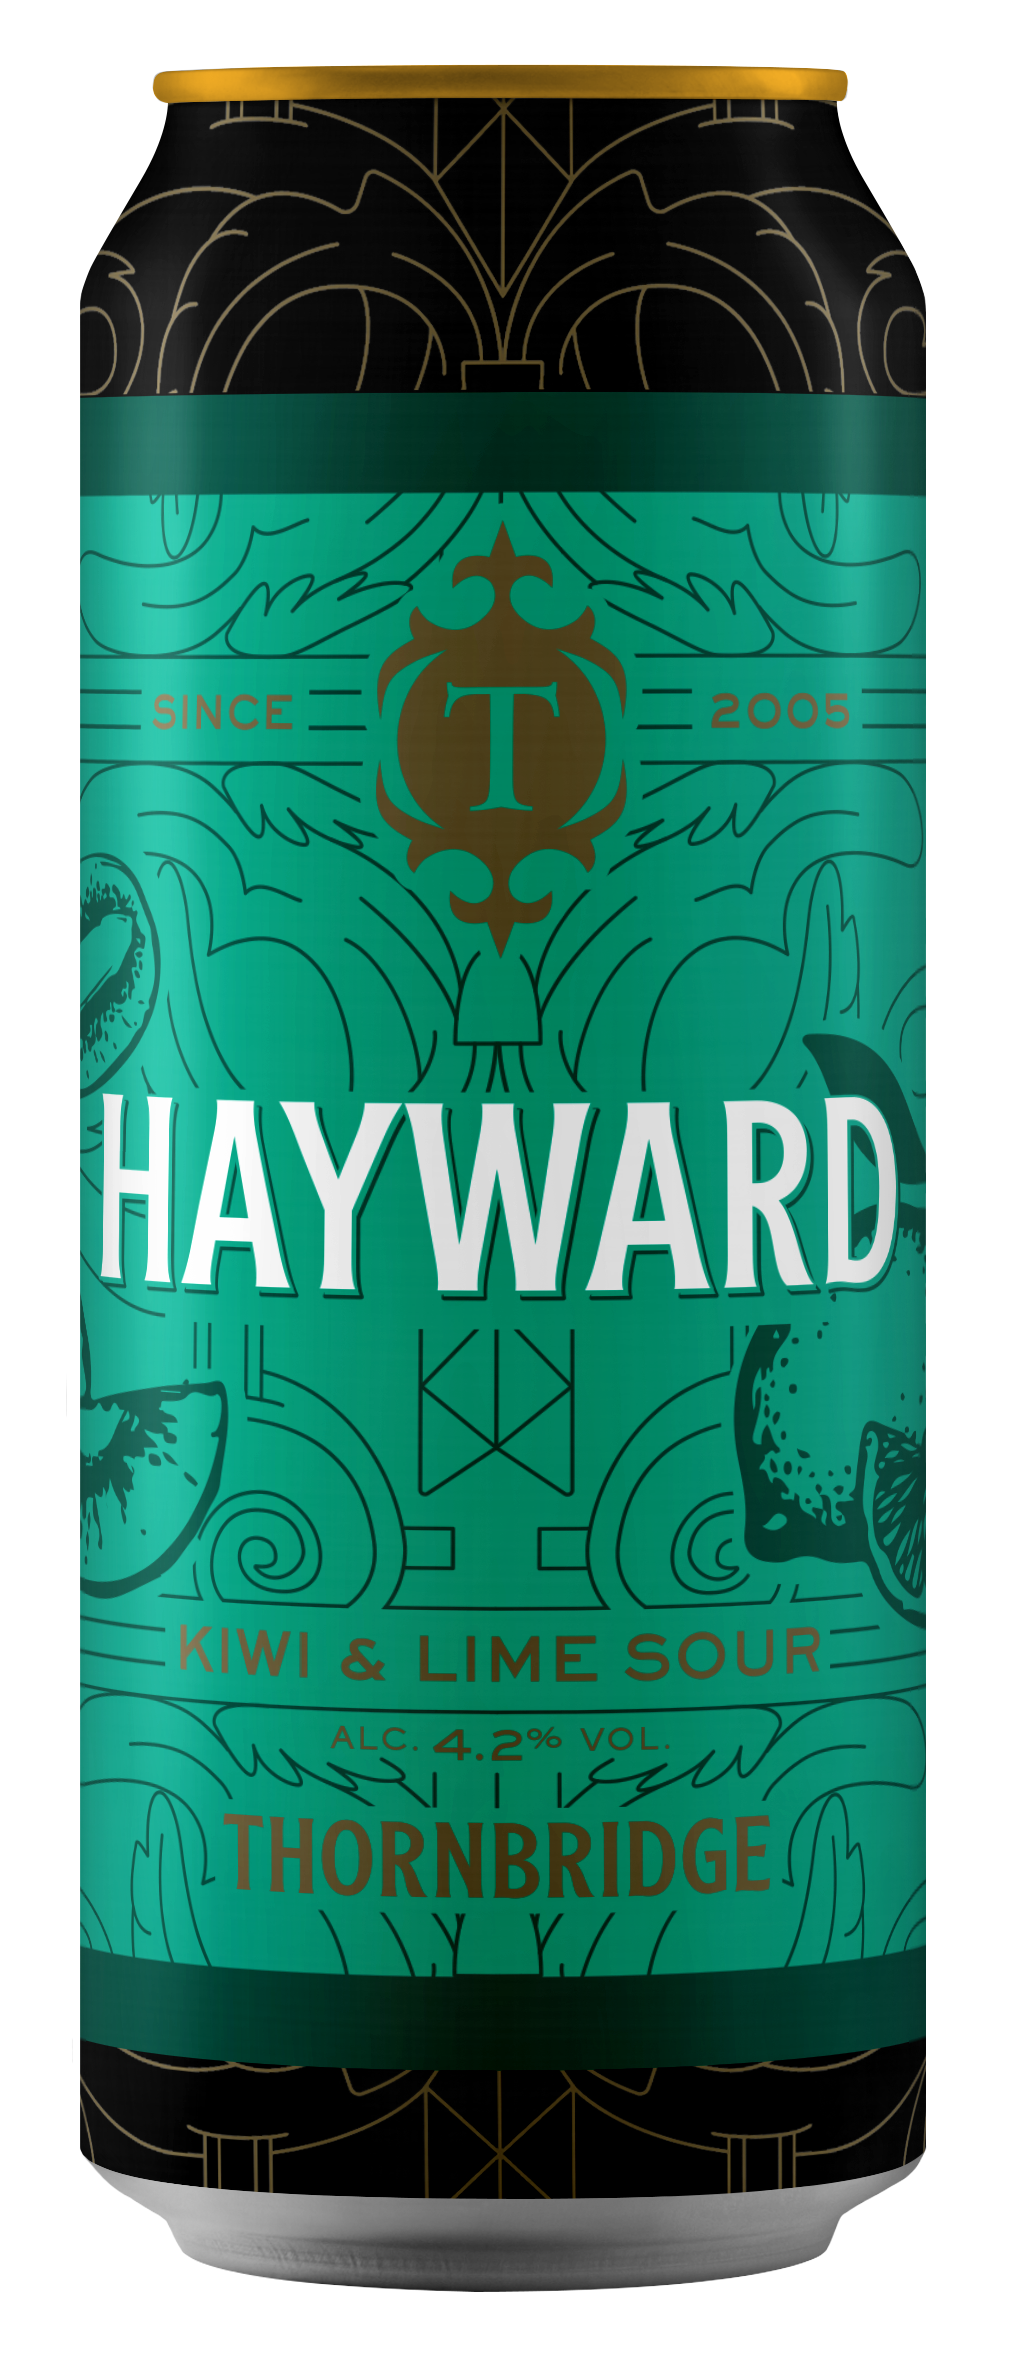 Thornbridge Hayward Kiwi & Lime Sour